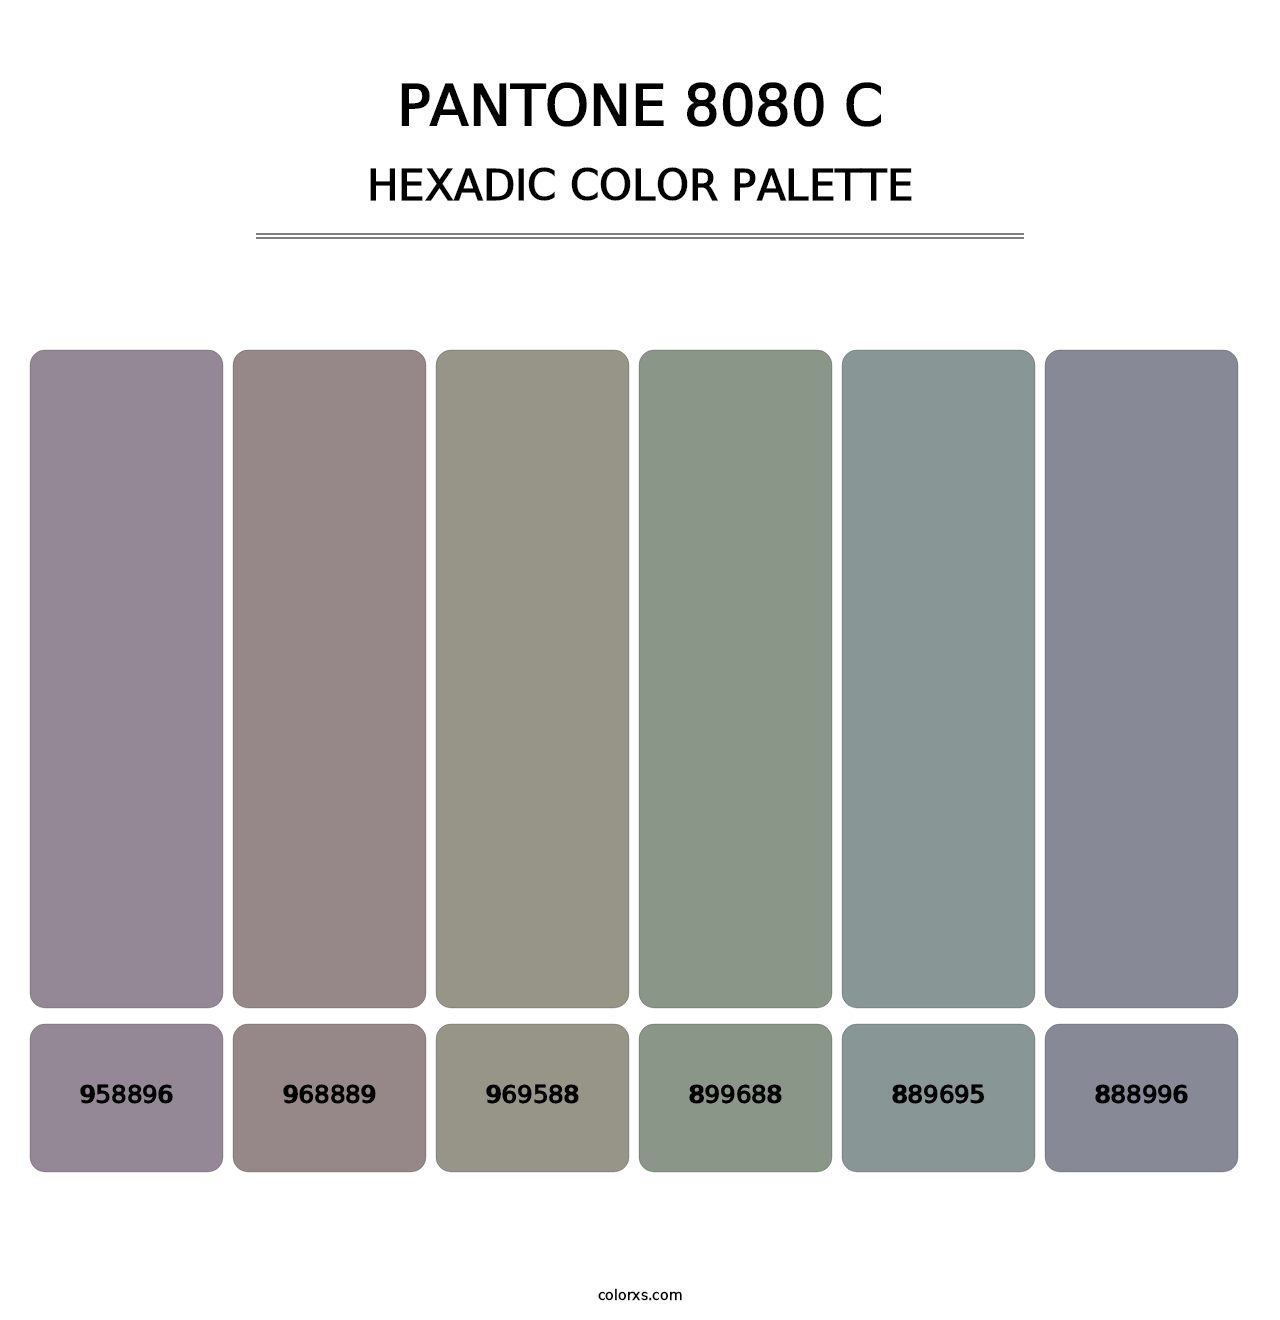 PANTONE 8080 C - Hexadic Color Palette